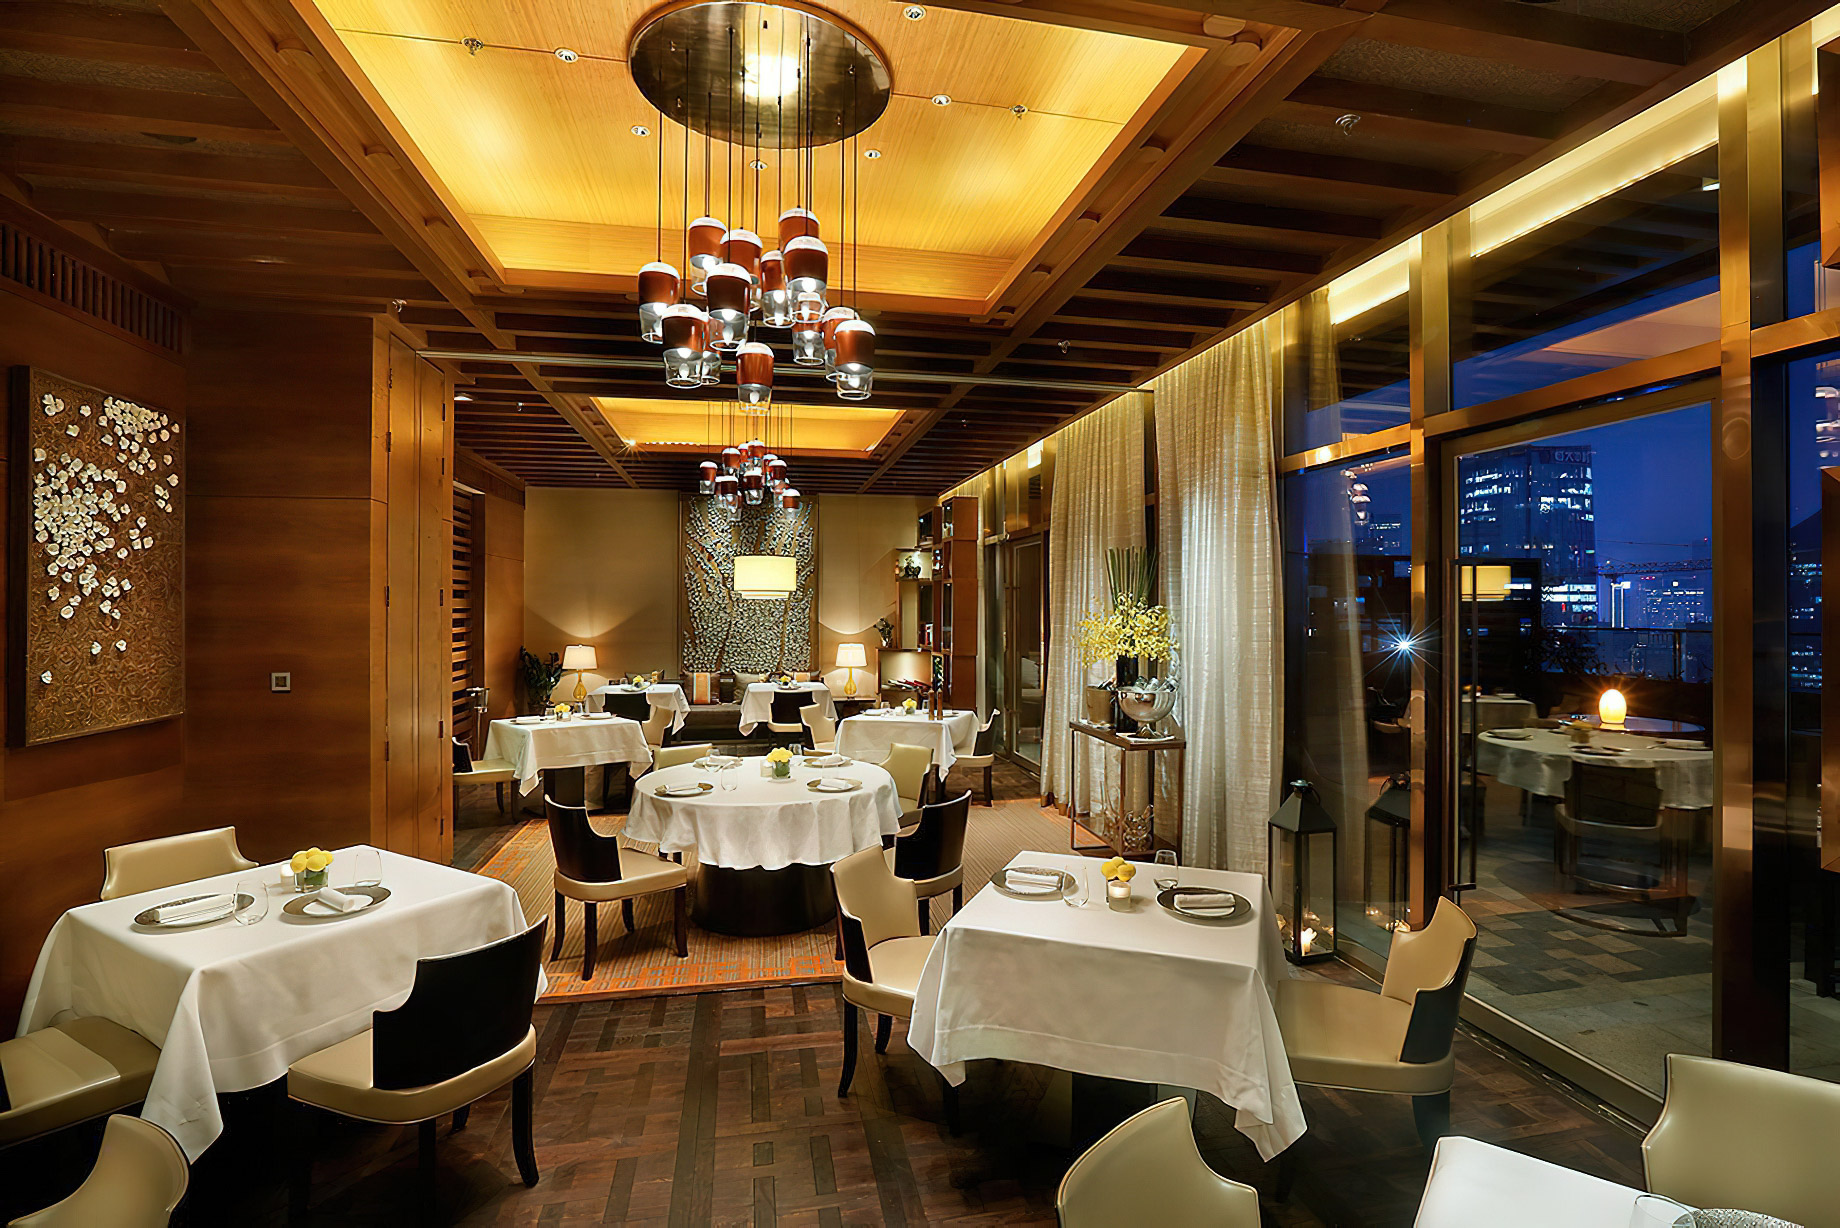 The Ritz-Carlton, Chengdu Hotel – Chengdu, Sichuan, China – Dining Room Tables